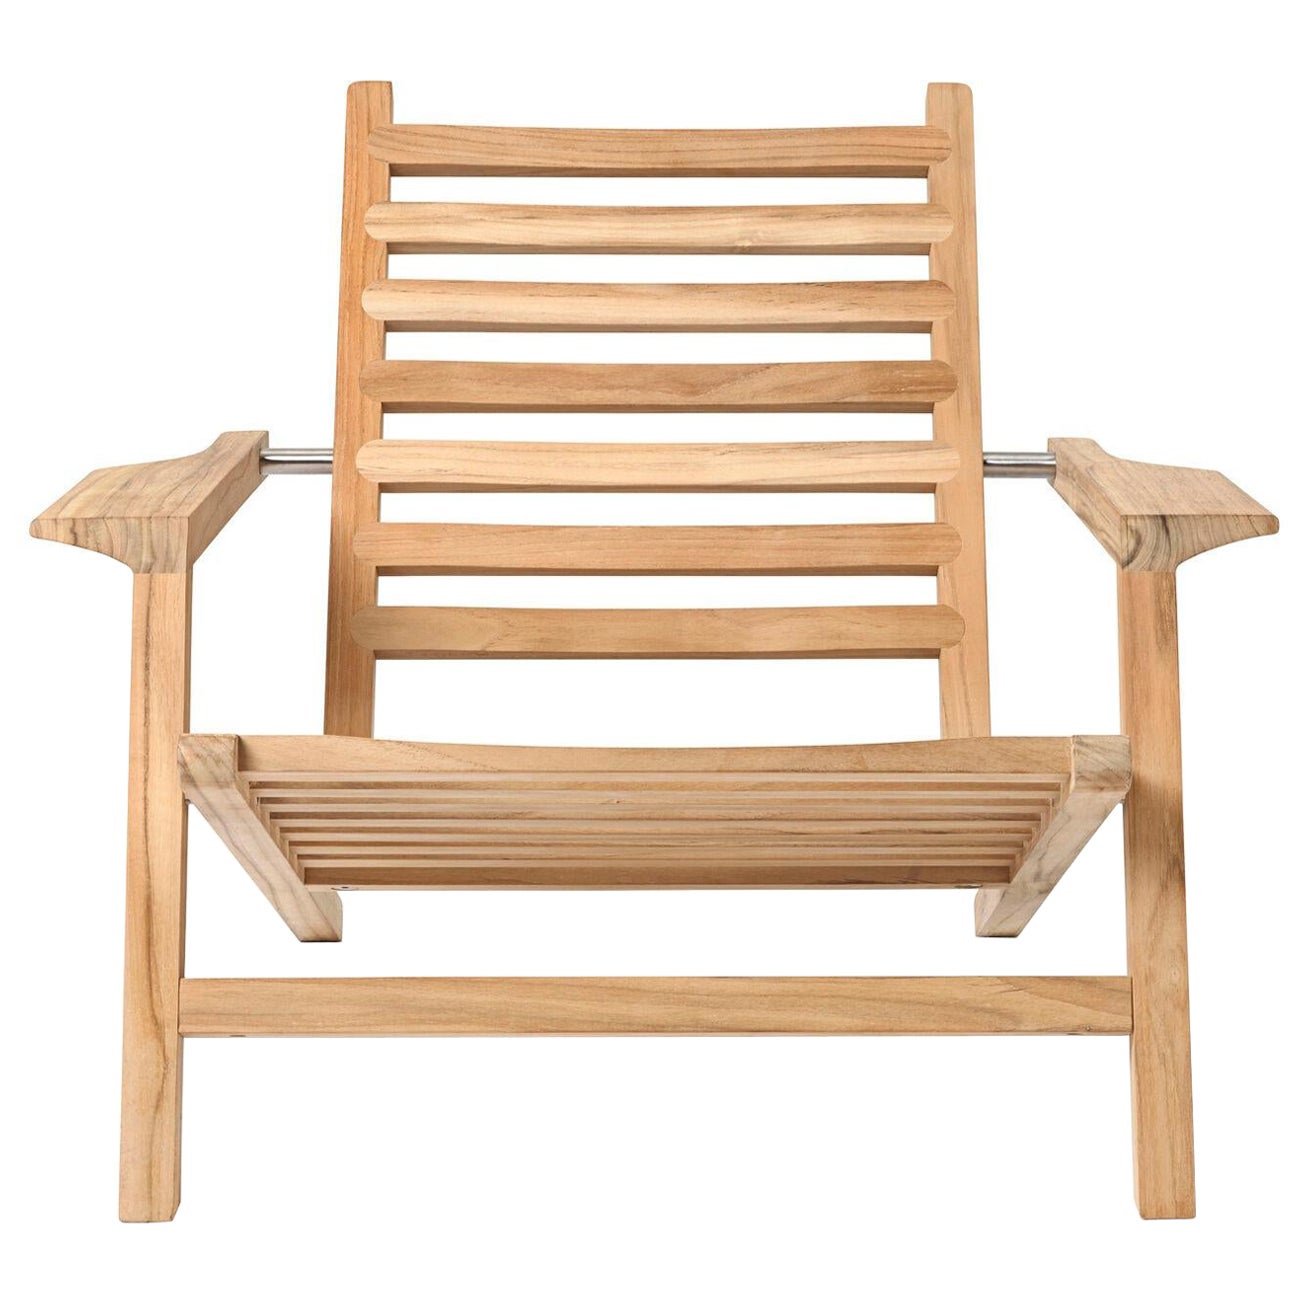 AH603 Outdoor Deck Chair in Untreated Teak *Quickship* For Sale